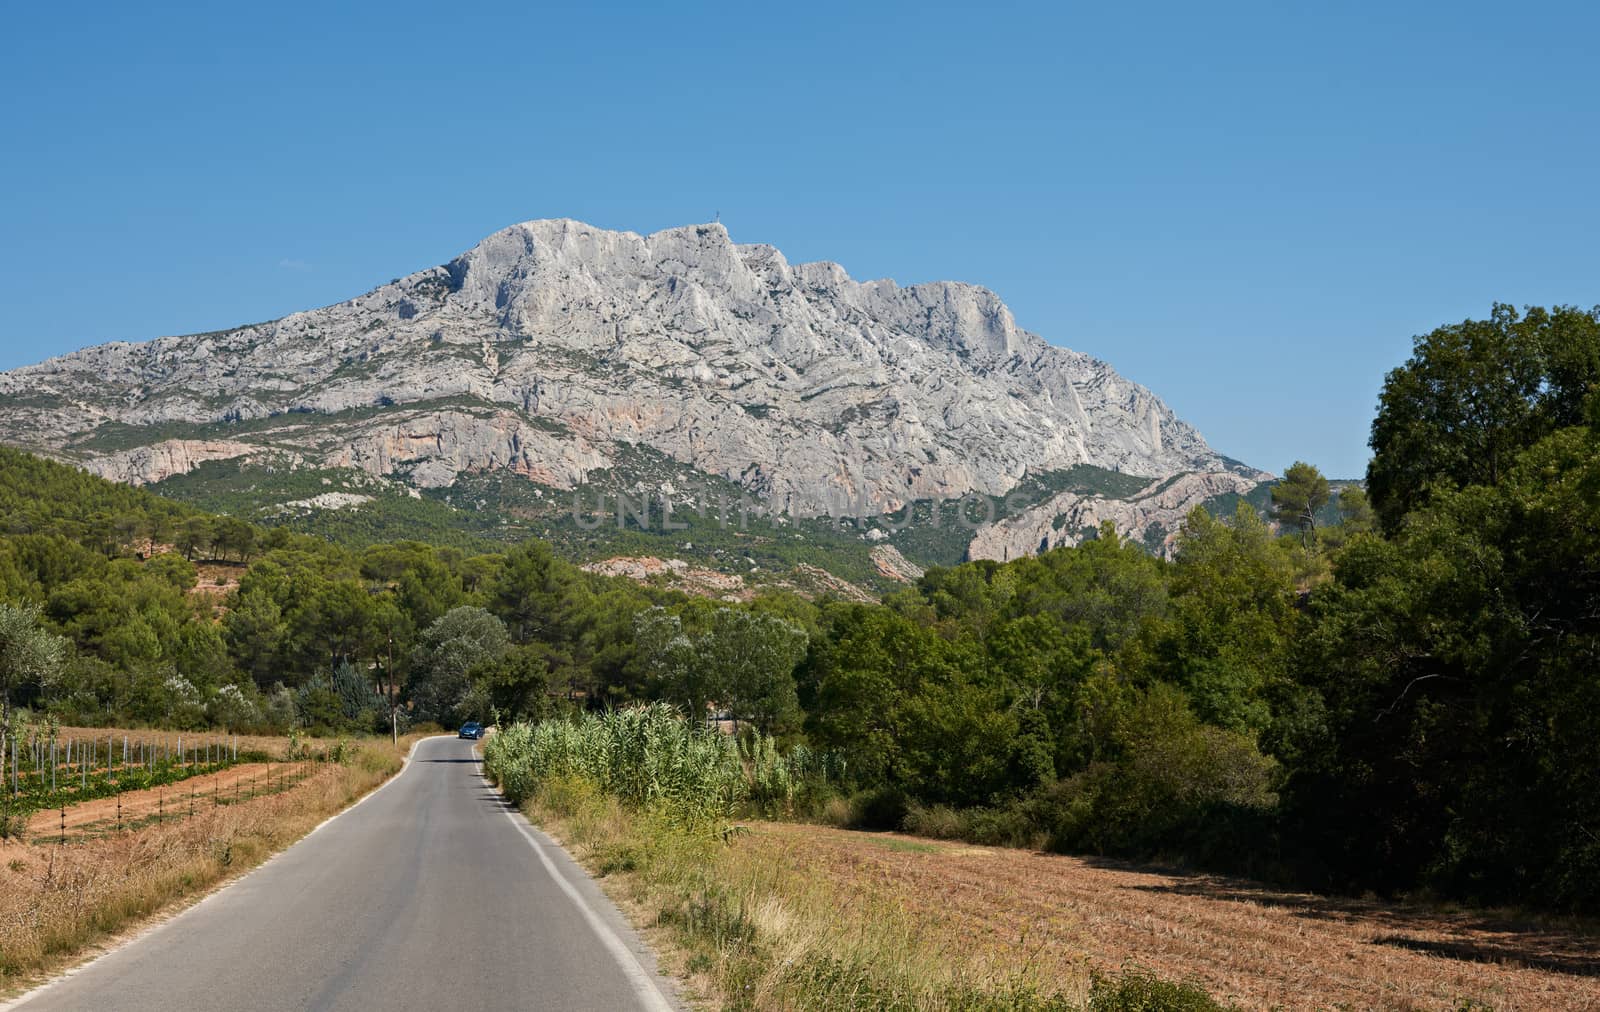 The big stone mountain near Aix en Provence, France